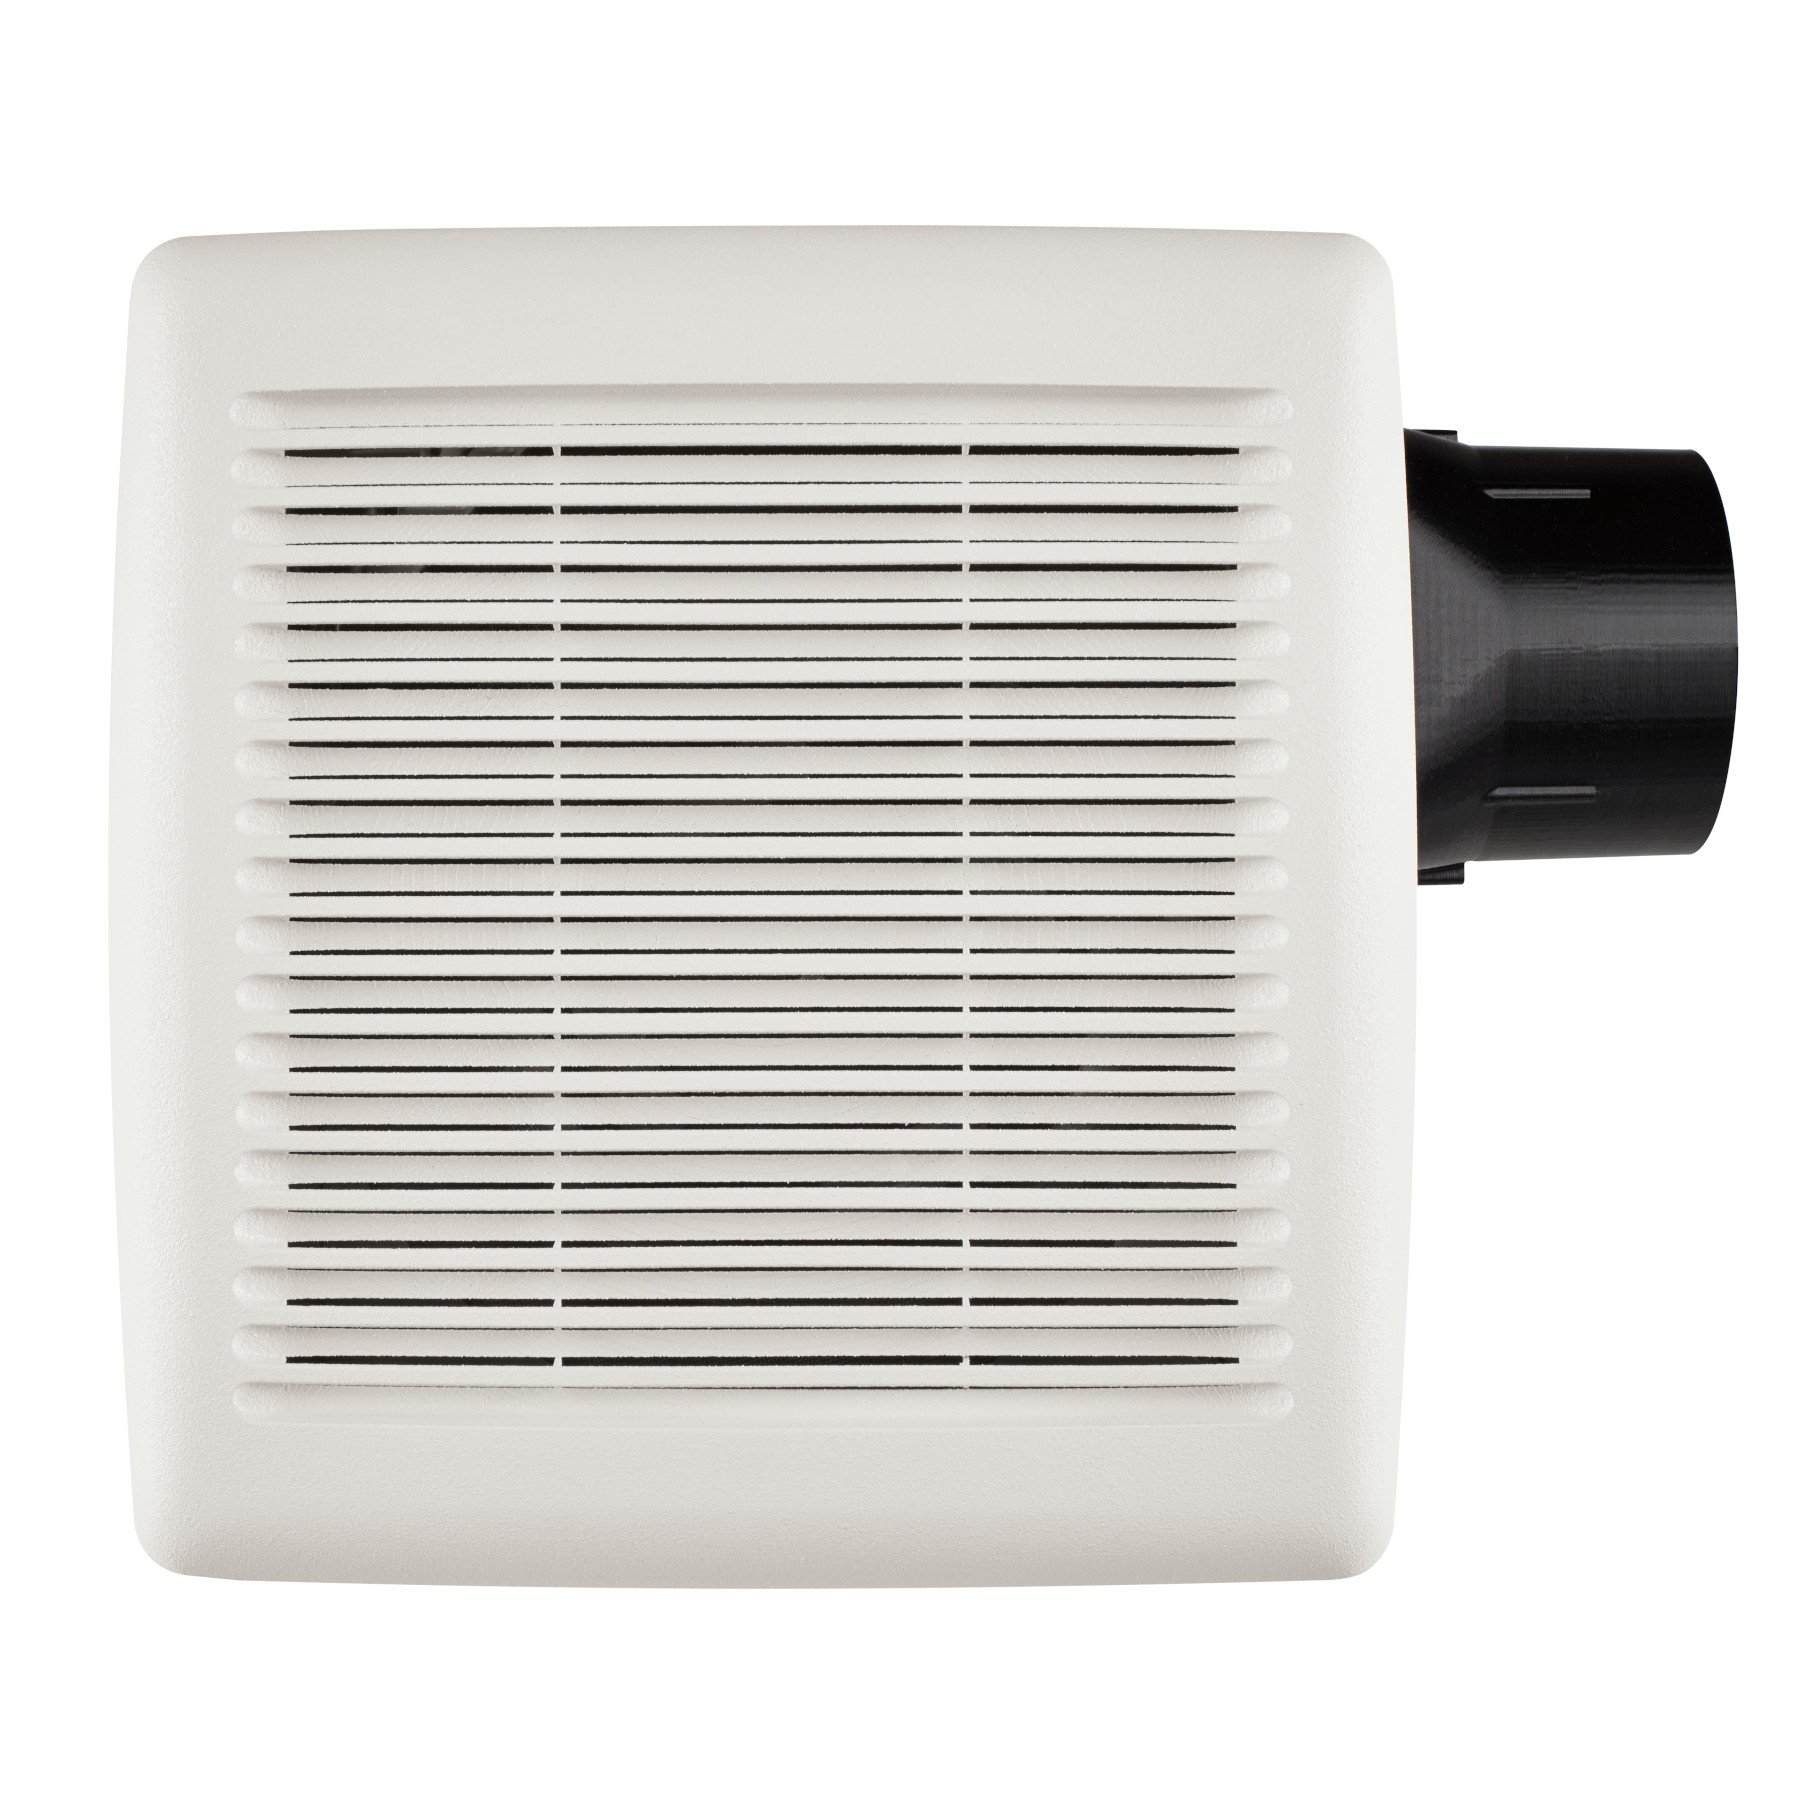  Flex Series™ ventilation Fan with selectable CFM